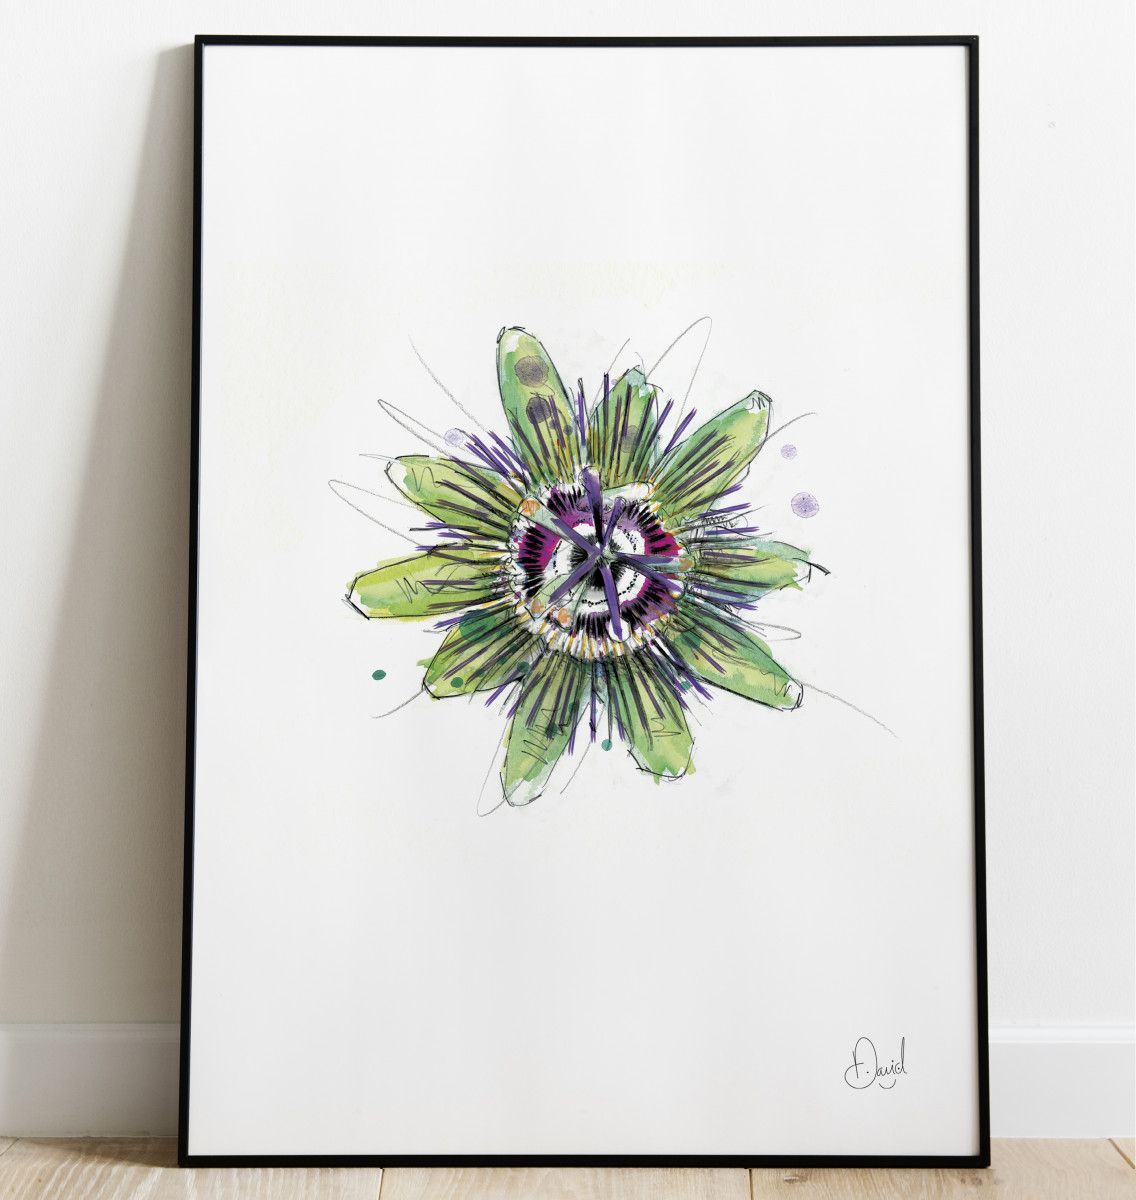 Passion flower - A passionate flower art print